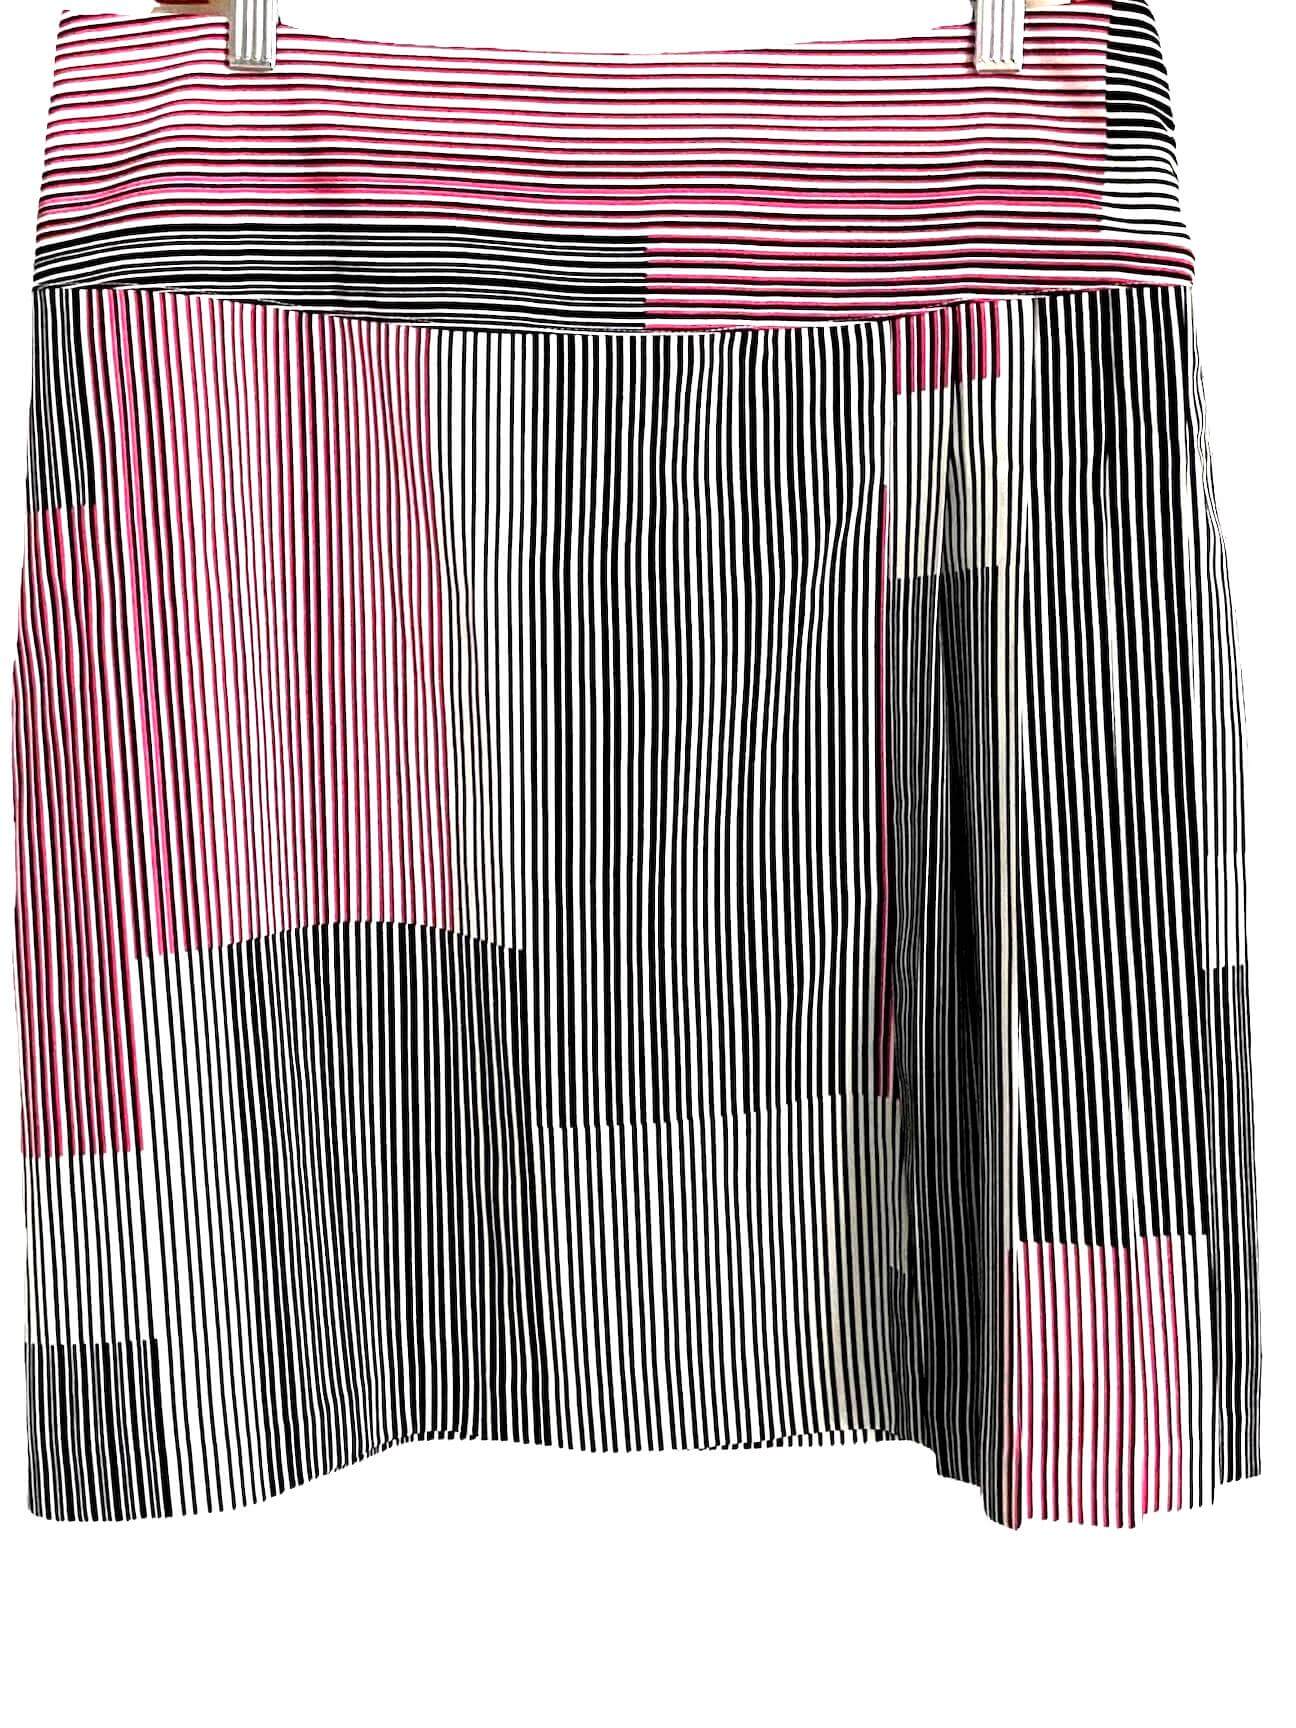 Cool Winter WORTHINGTON pink and black block print skirt